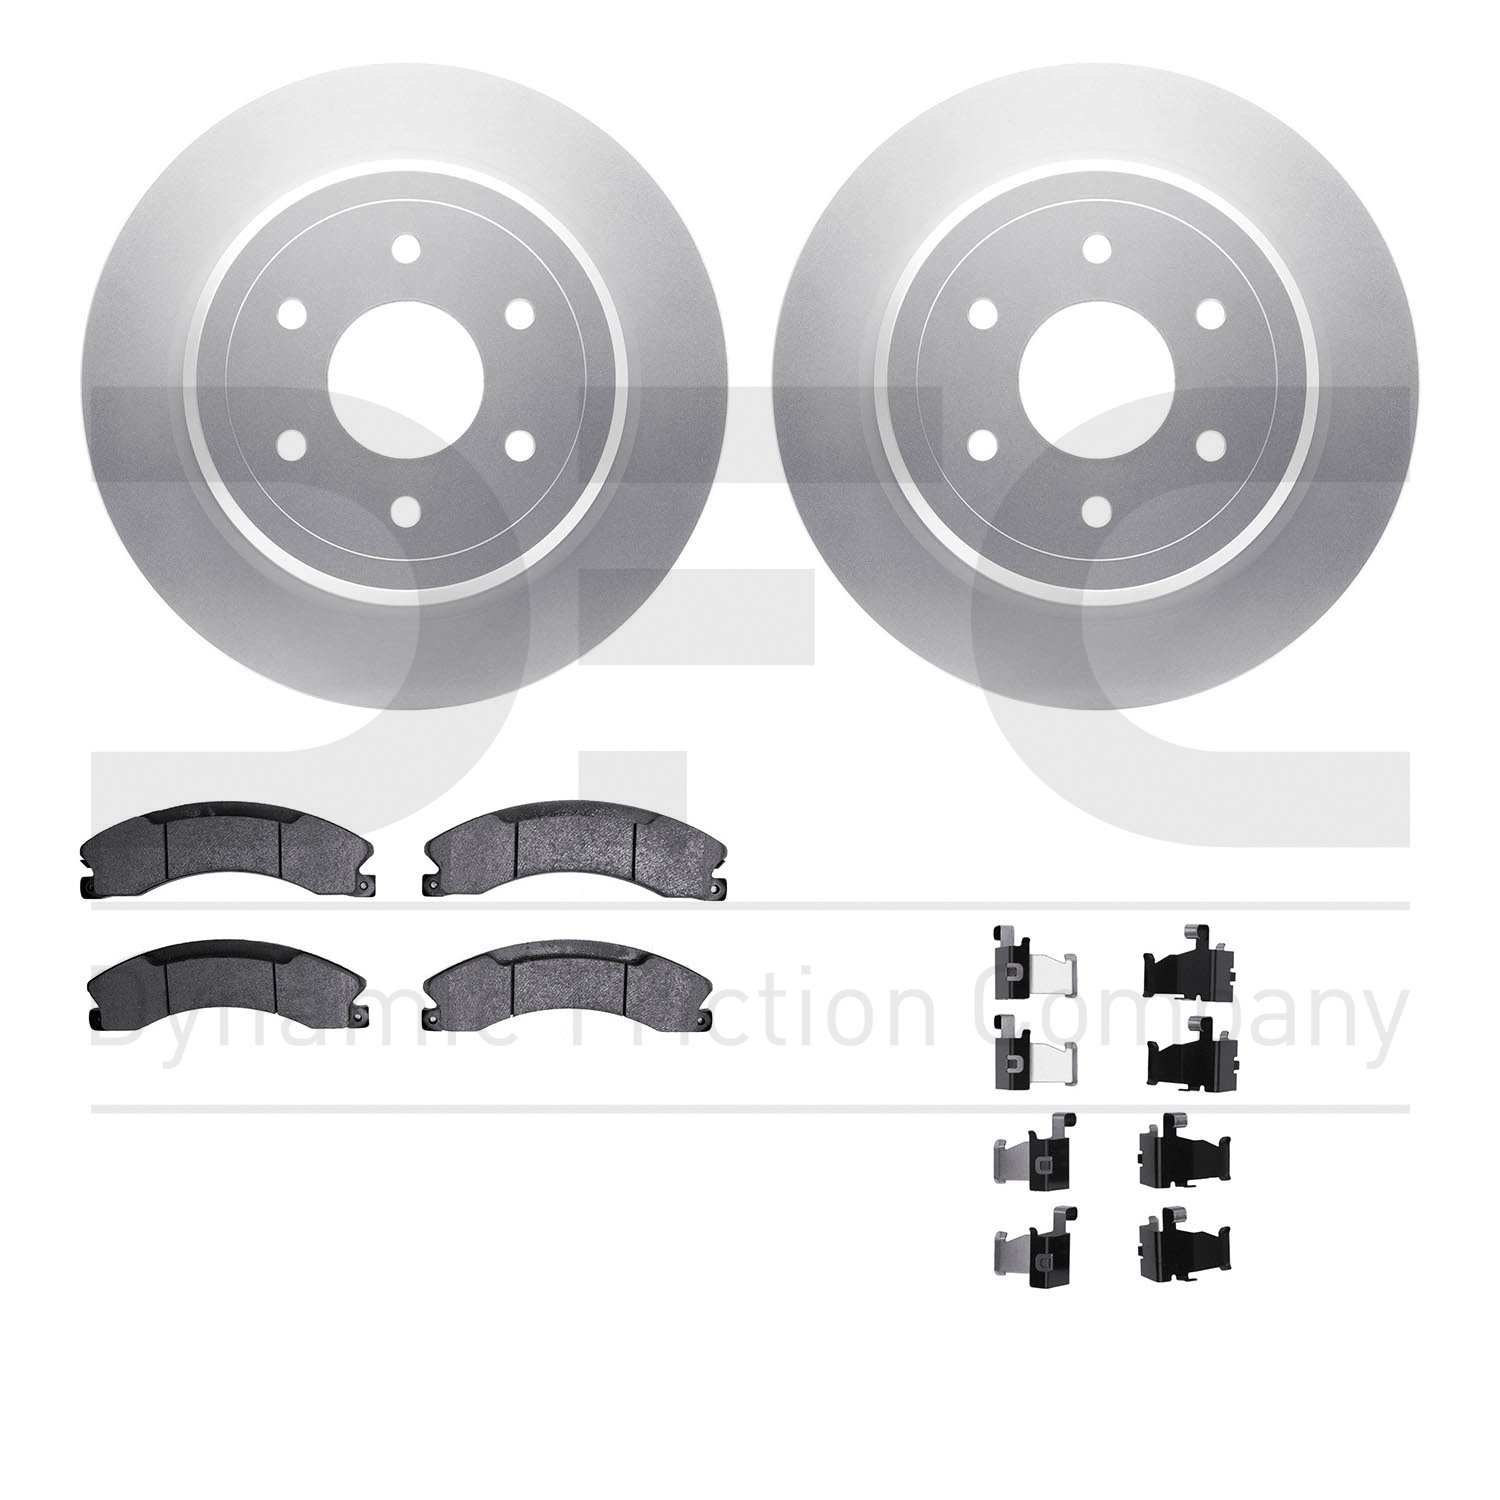 4412-67009 Geospec Brake Rotors with Ultimate-Duty Brake Pads & Hardware, Fits Select Infiniti/Nissan, Position: Rear